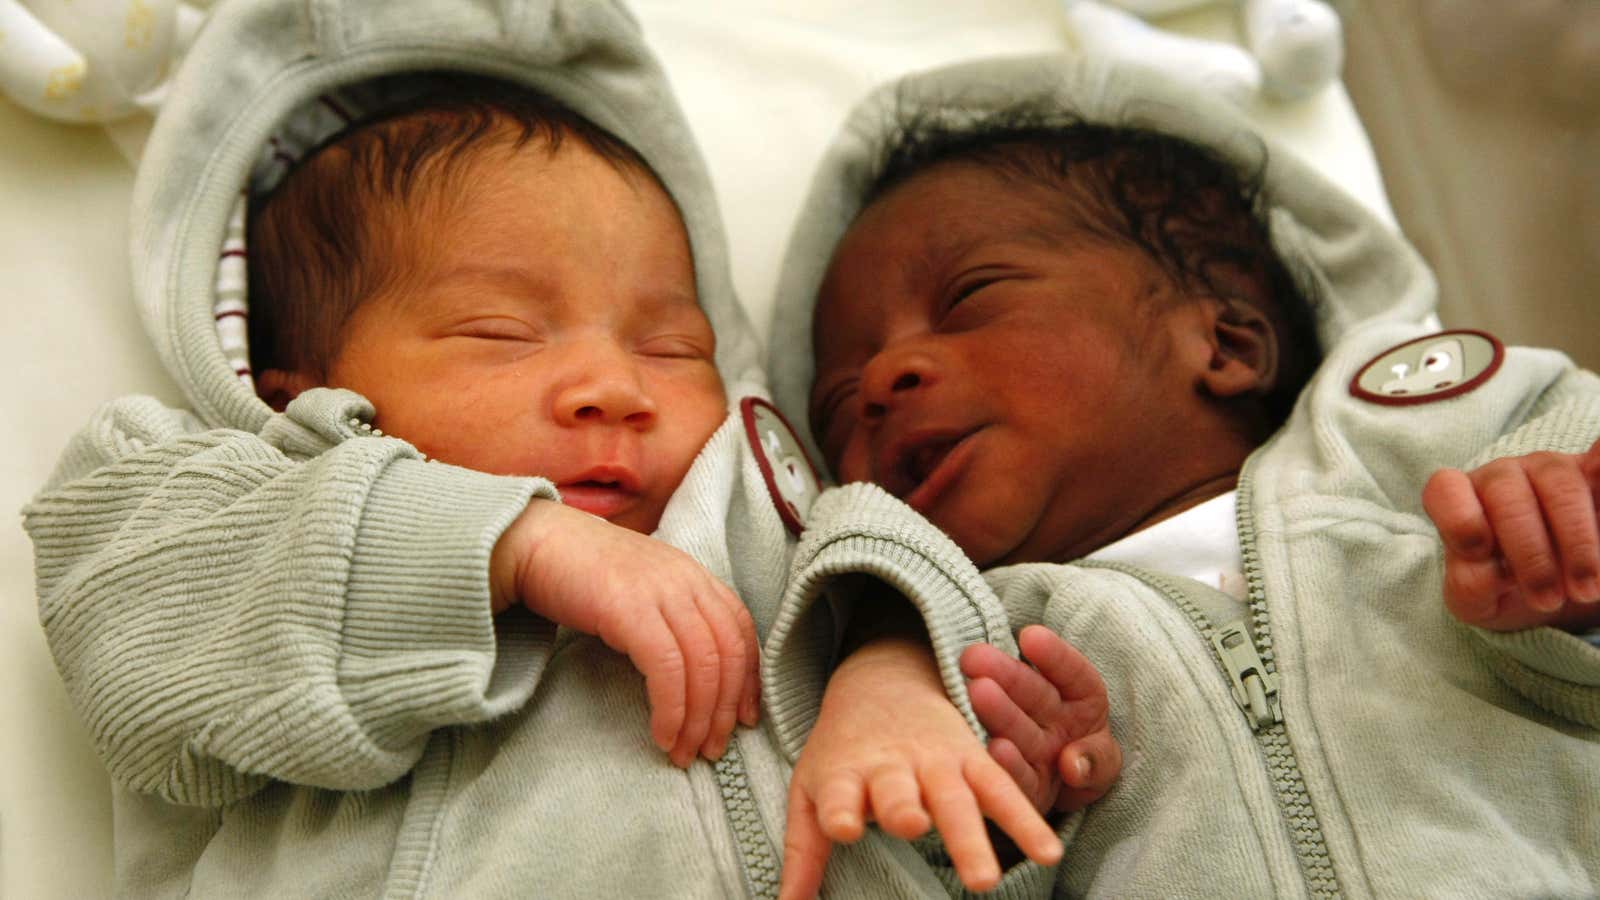 Twin baby boys born into a culturally complex world.